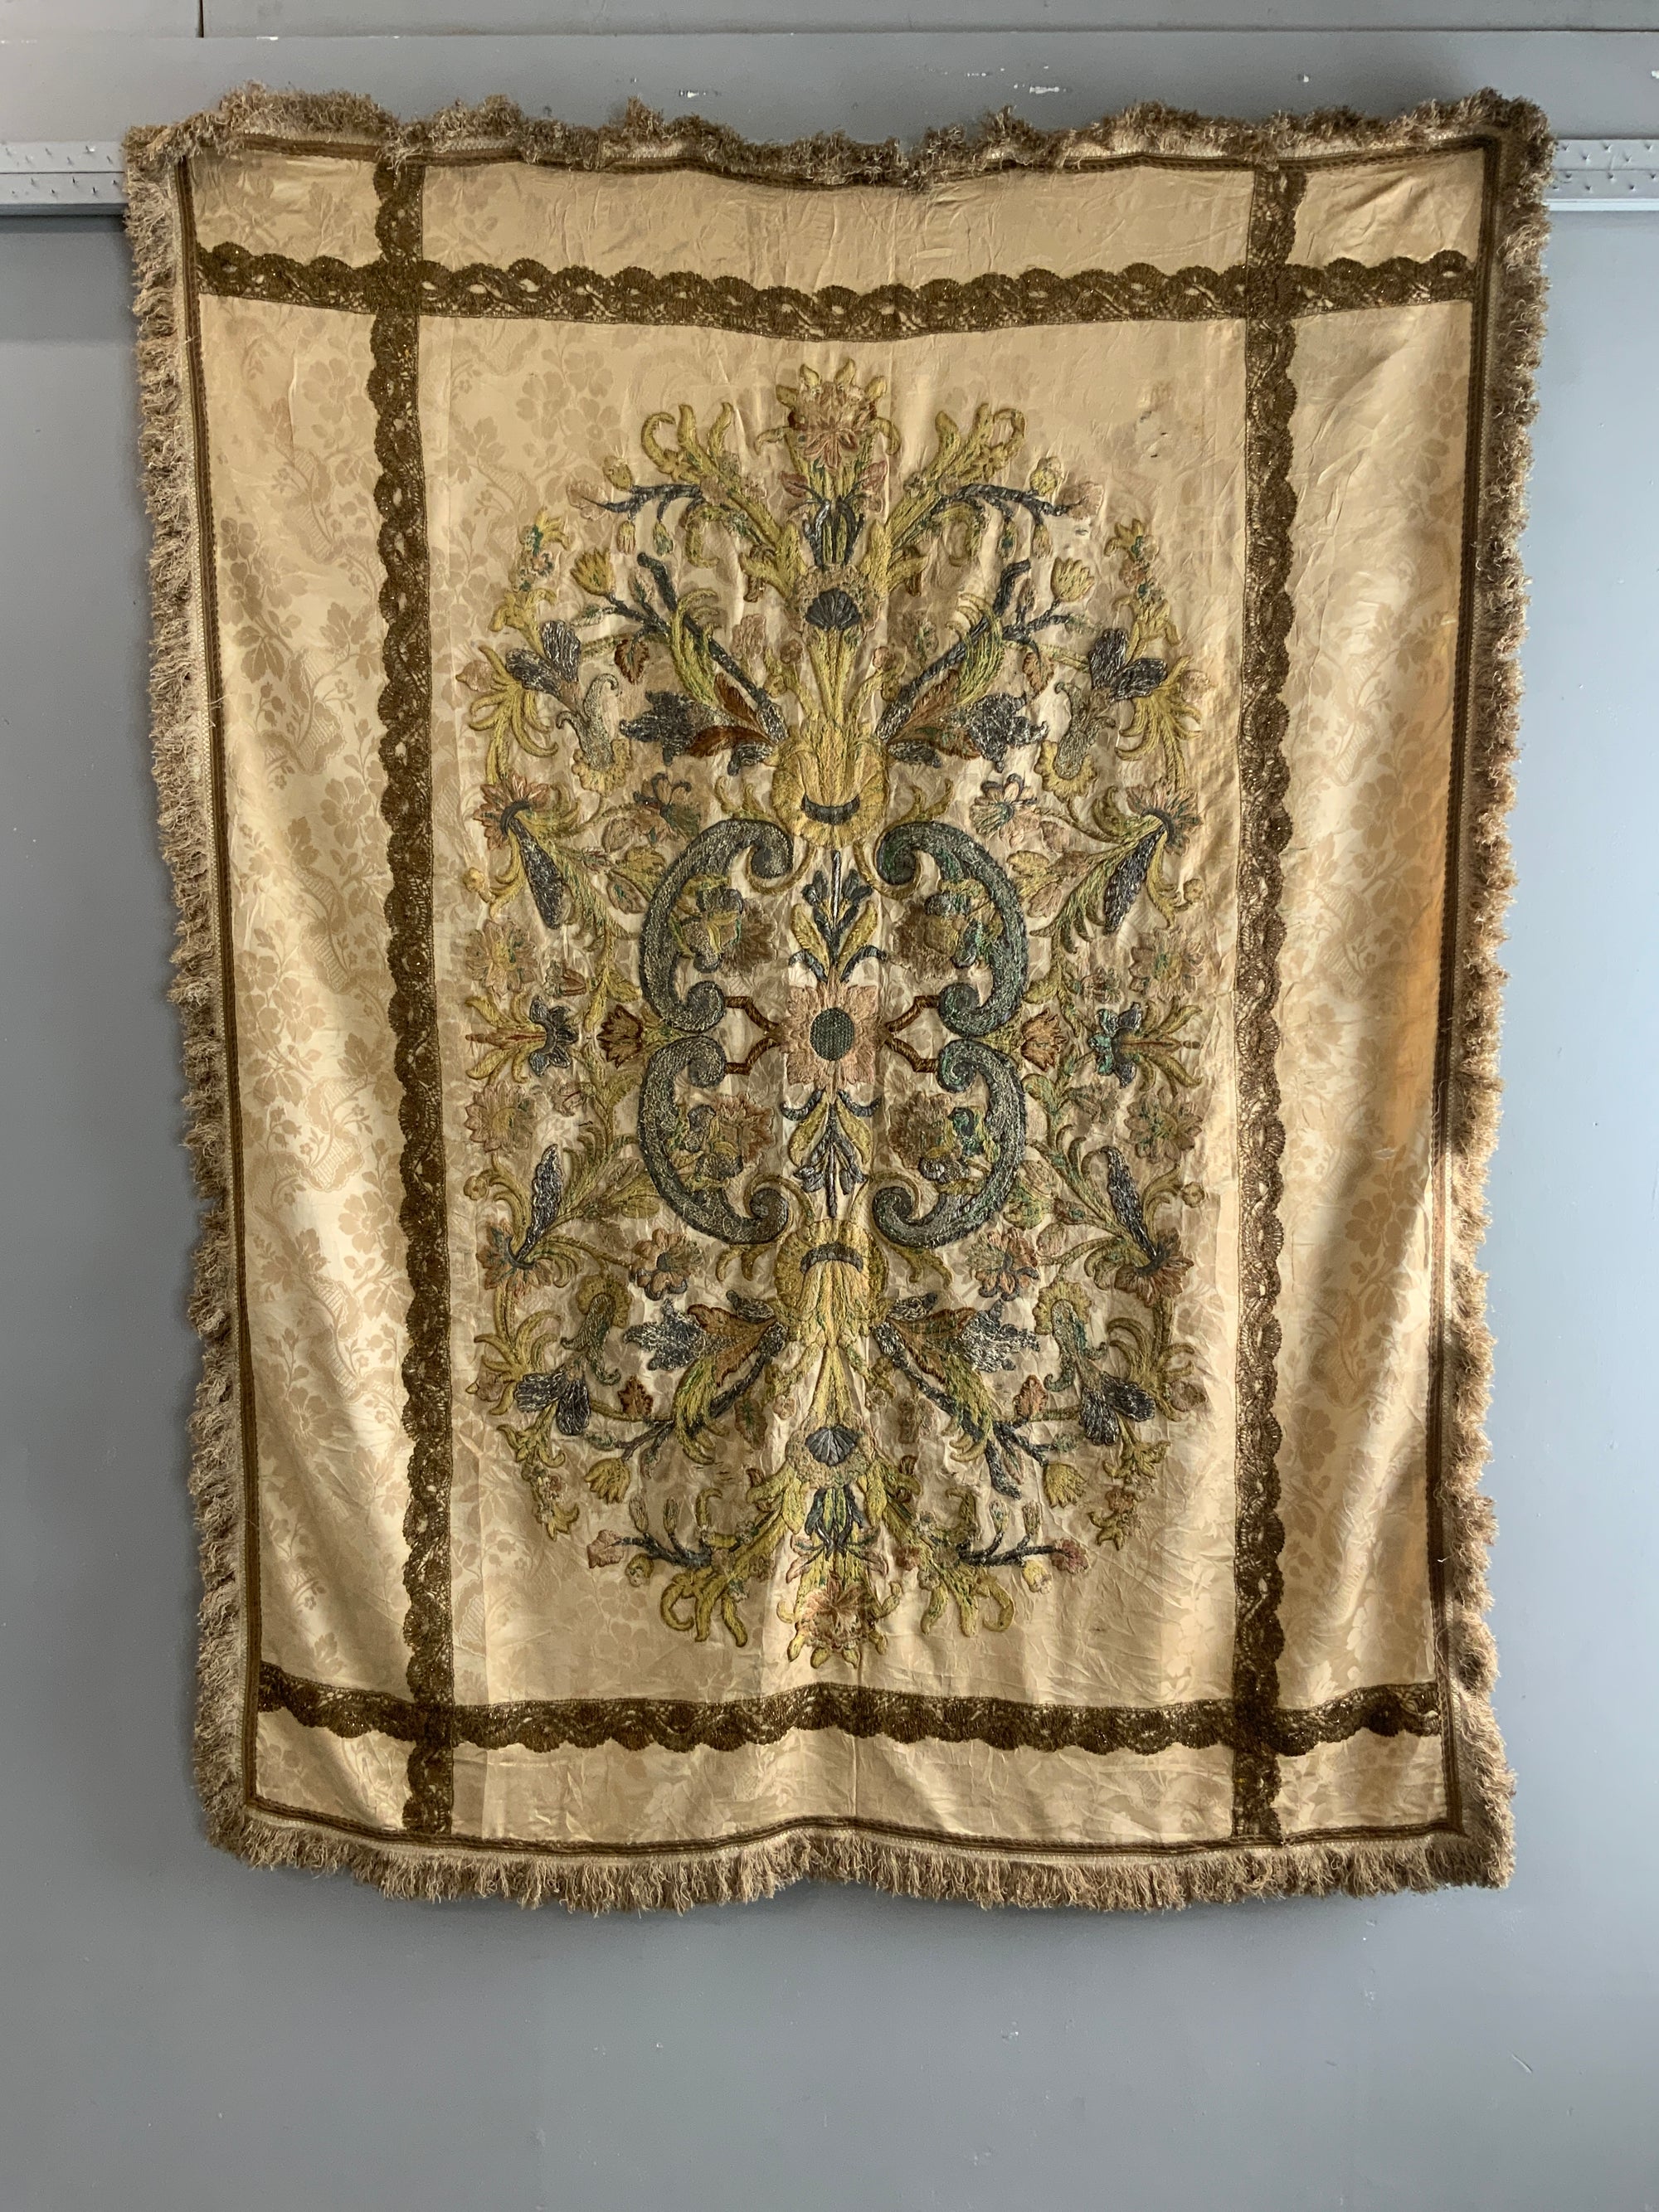 Re-applied 18th C Italian silk embroidery (161 x 122cm)